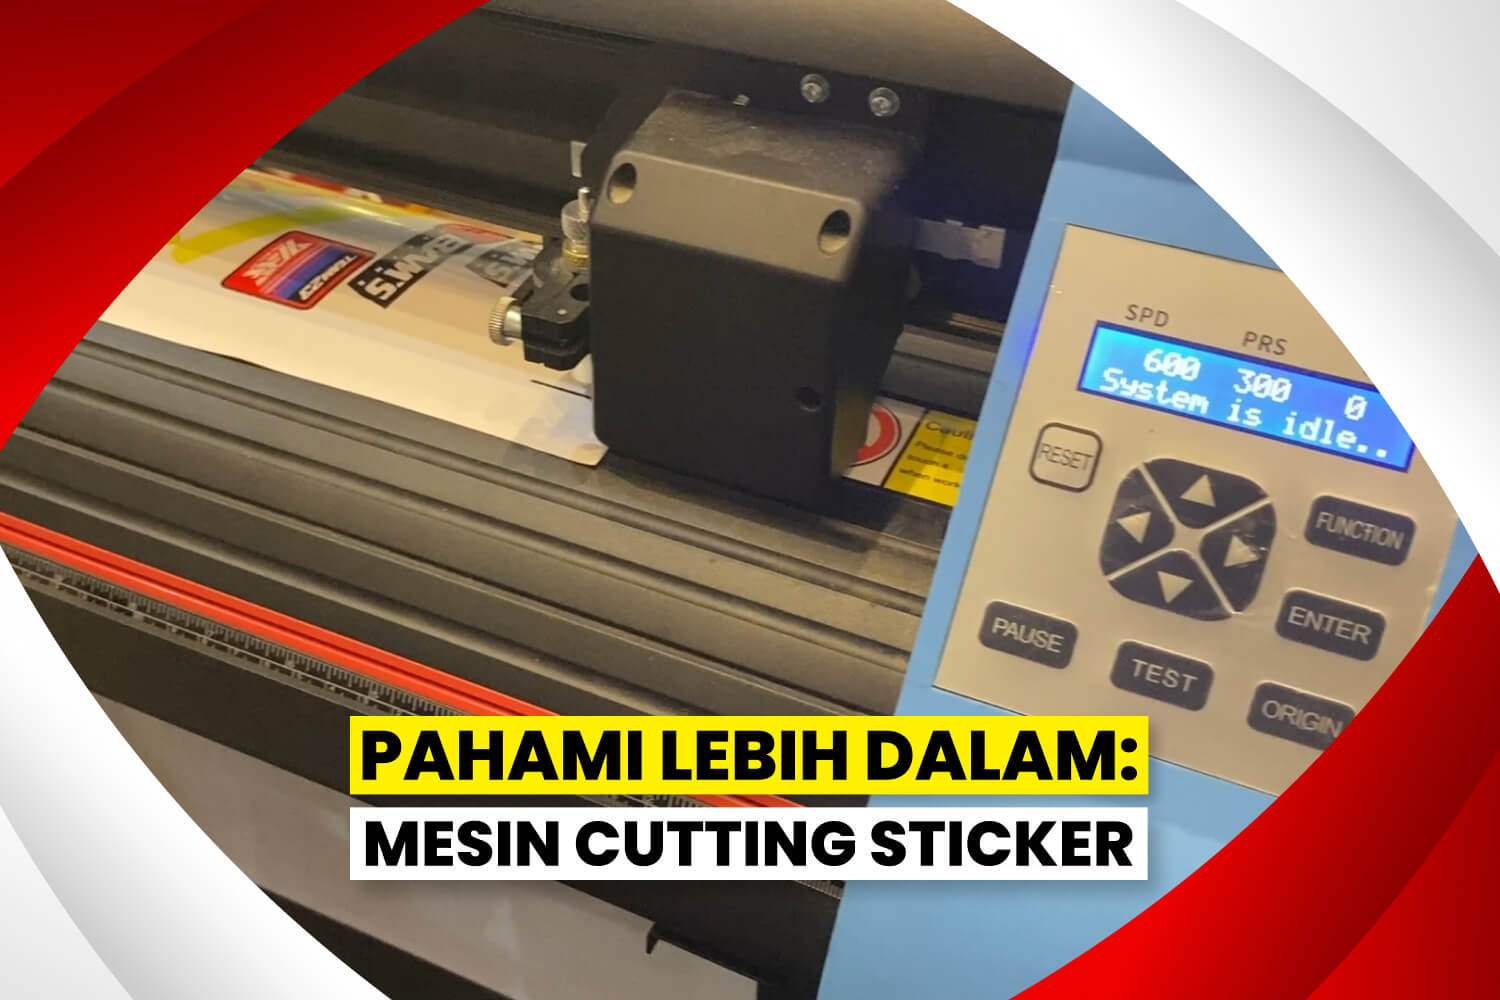 Mesin Cutting Sticker Modern Di Lingkungan Percetakan